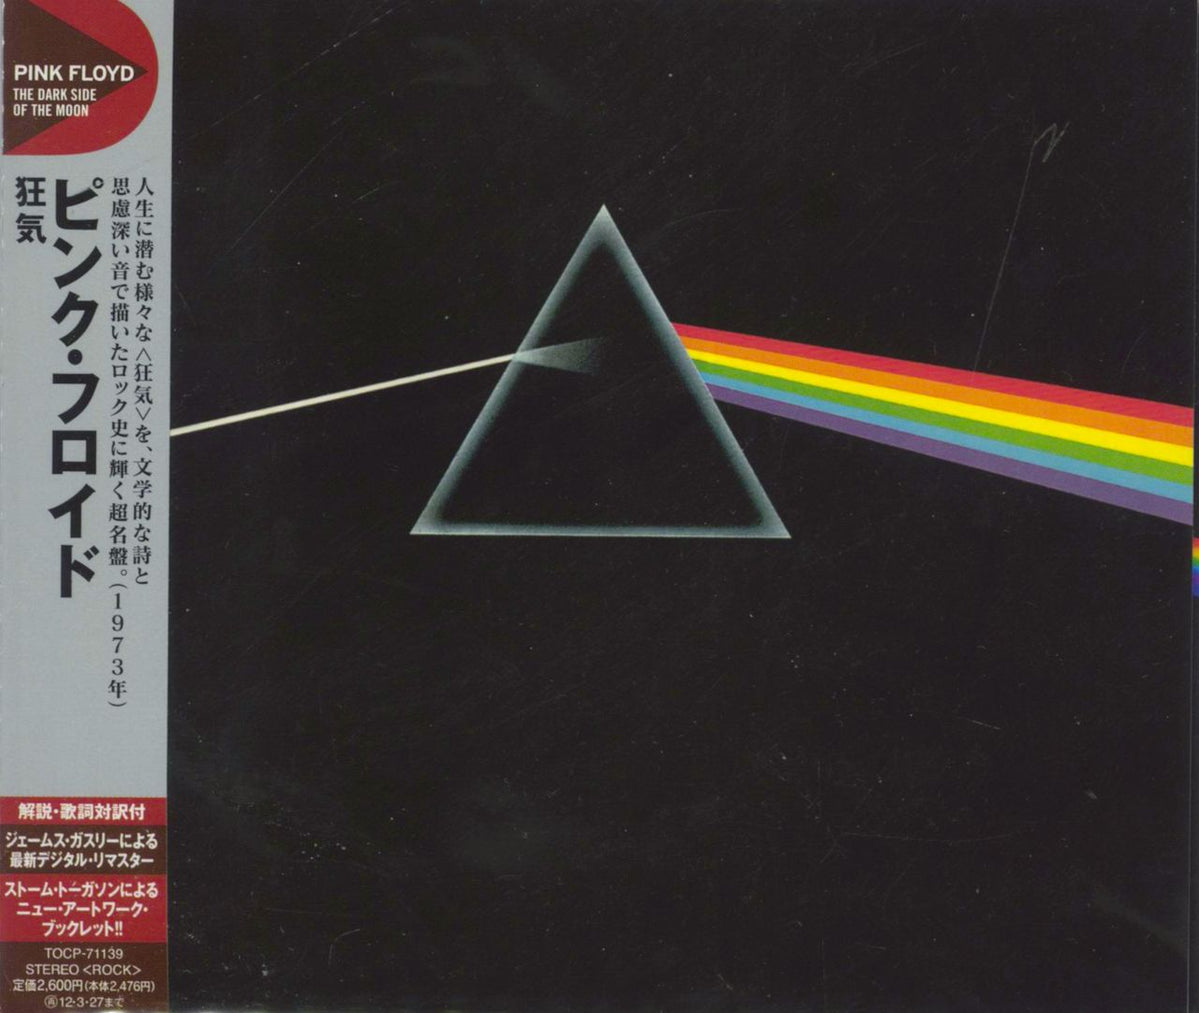 Pink Floyd The Dark Side Of The Moon Japanese CD album — RareVinyl.com